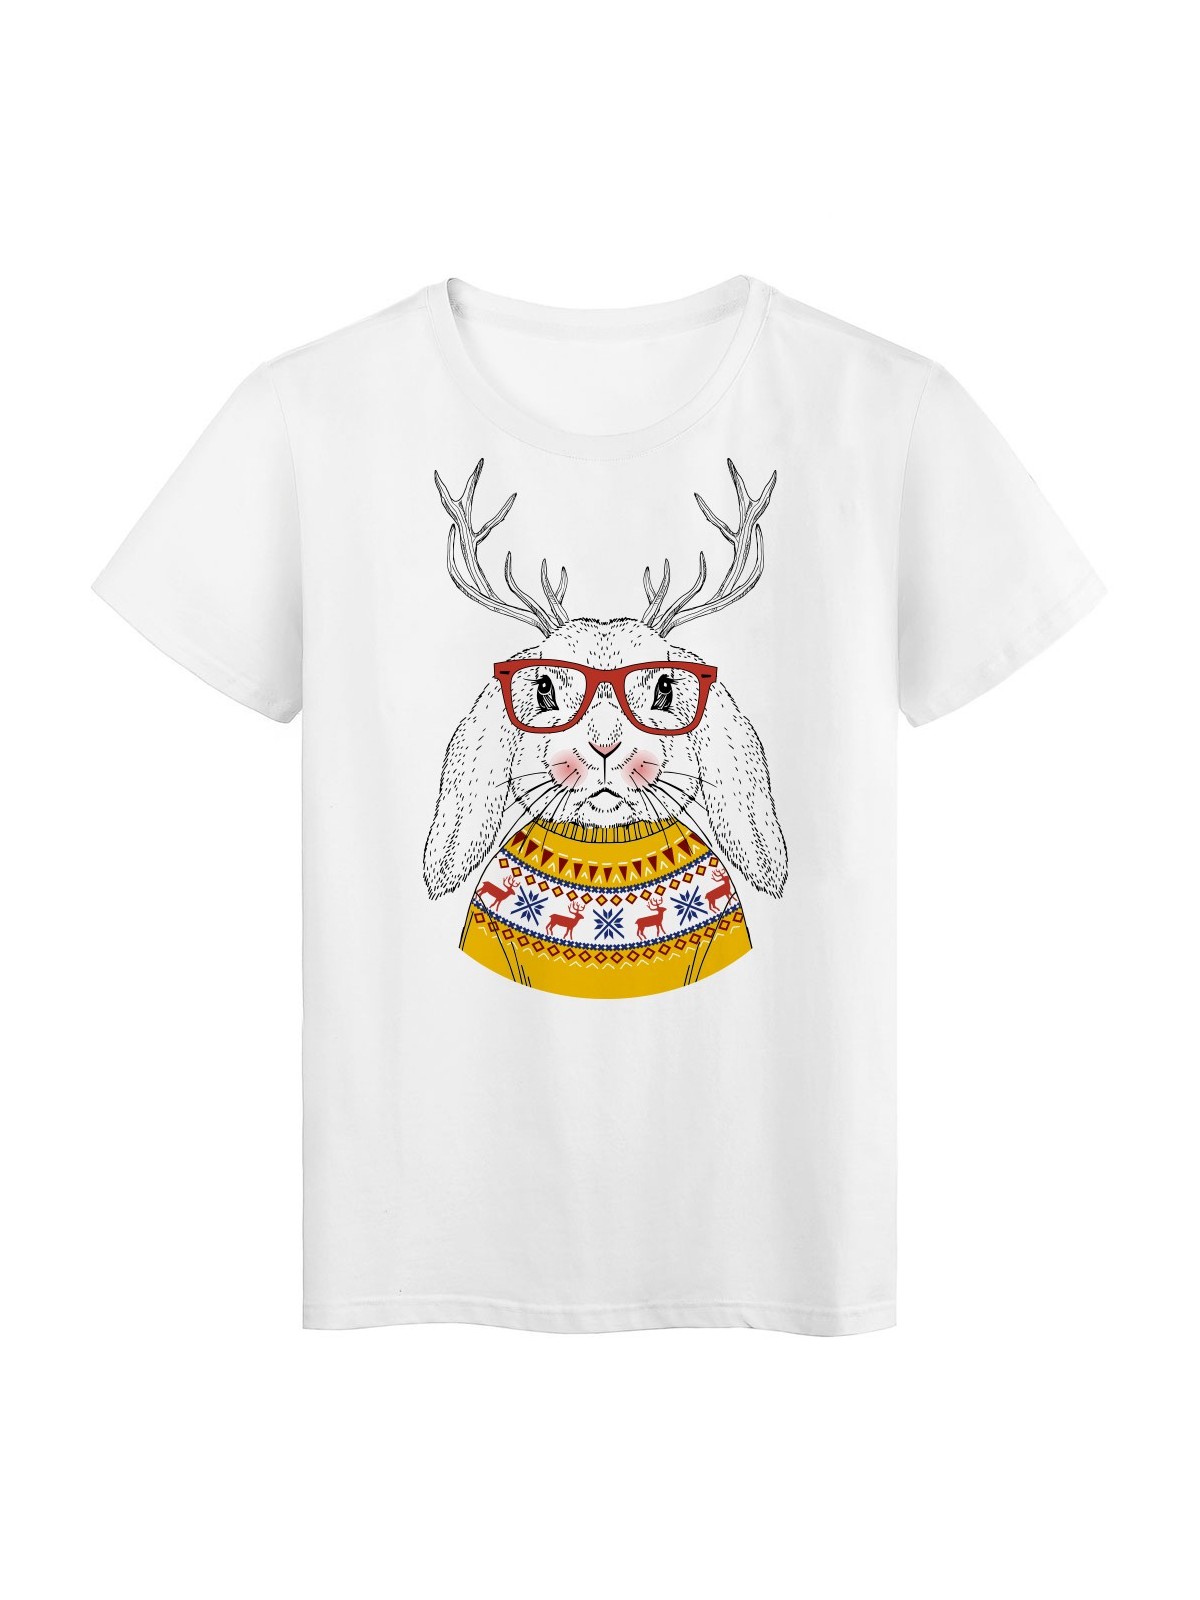 T-Shirt blanc Design Lapin corne de renne noÃ«l humour rÃ©f tee shirt 2183